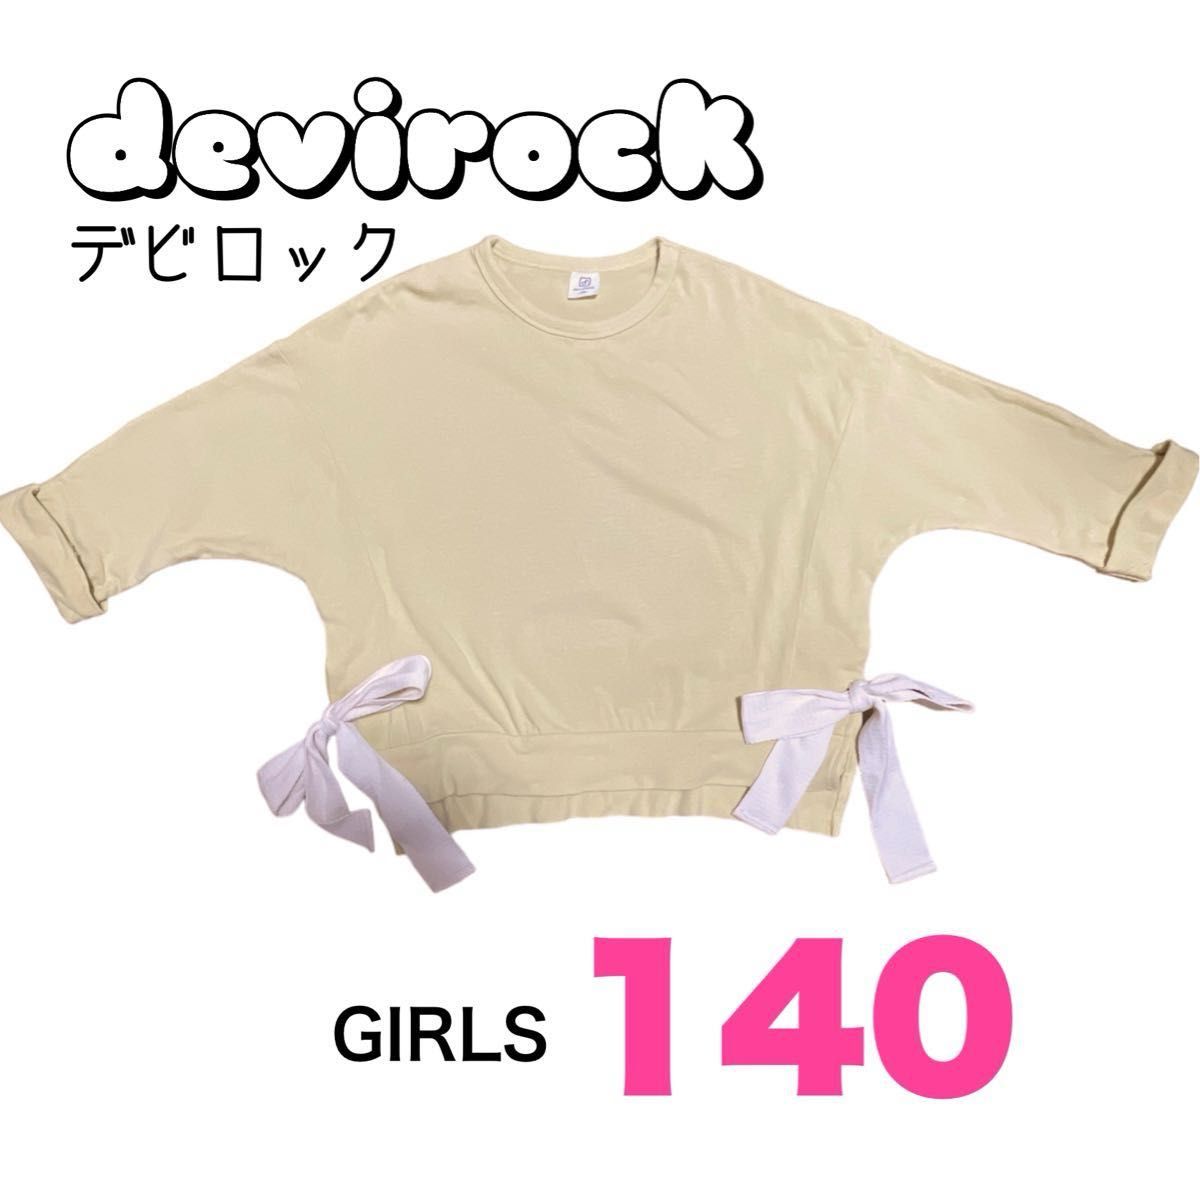 devirock デビロック 140 七分袖 サイドリボンTシャツ 女の子 春服 イエロー